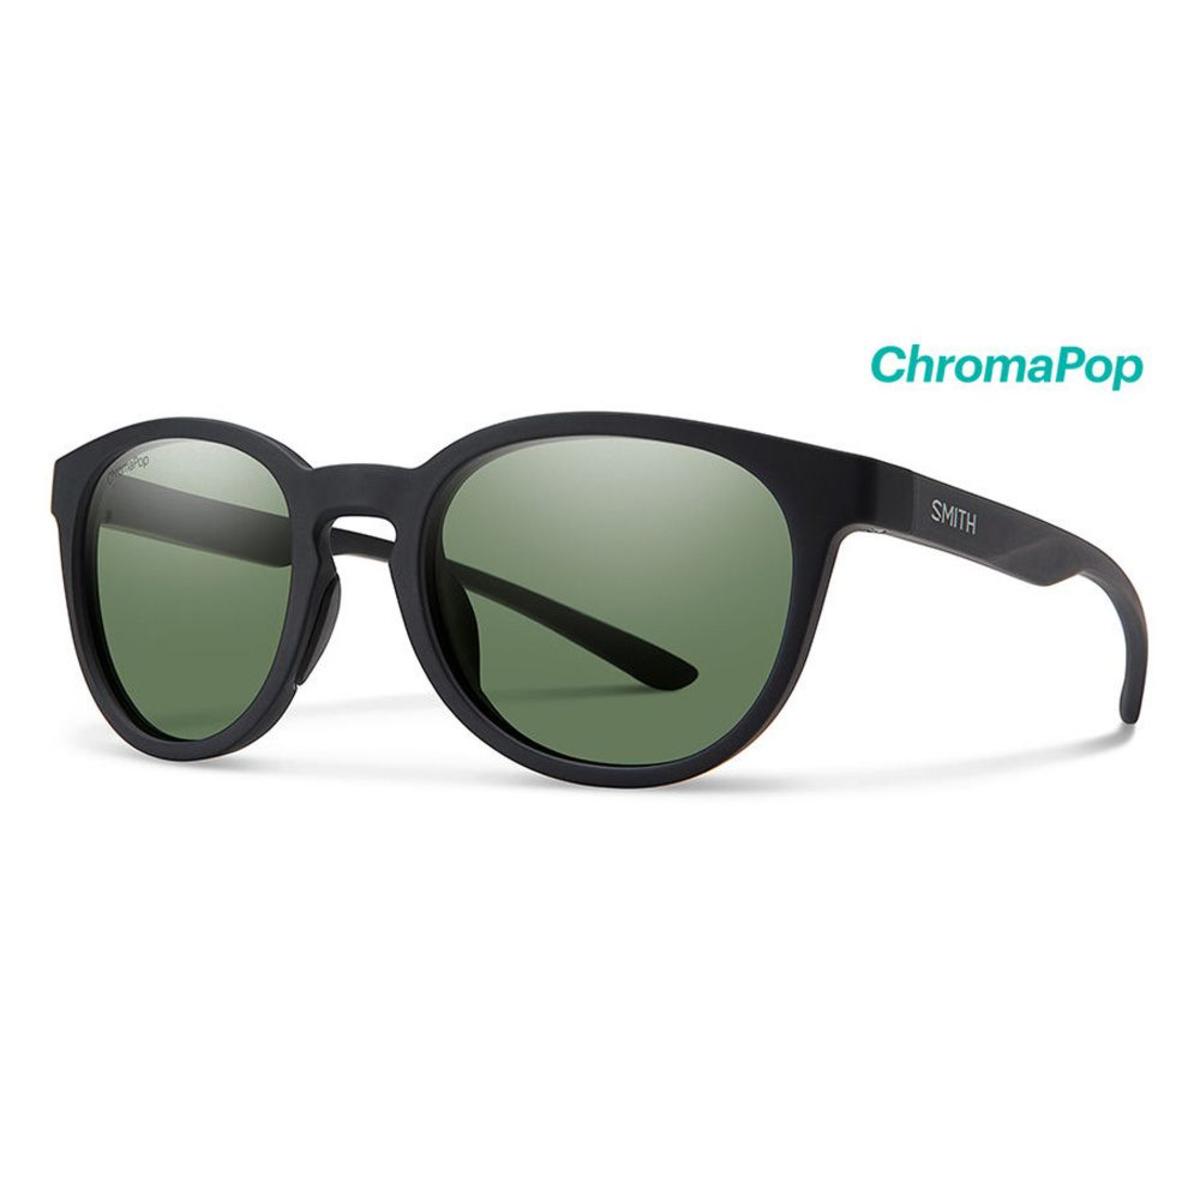 Smith Optics Eastbank Sunglasses Chromapop Polarized Gray Green - Matte Black Frame